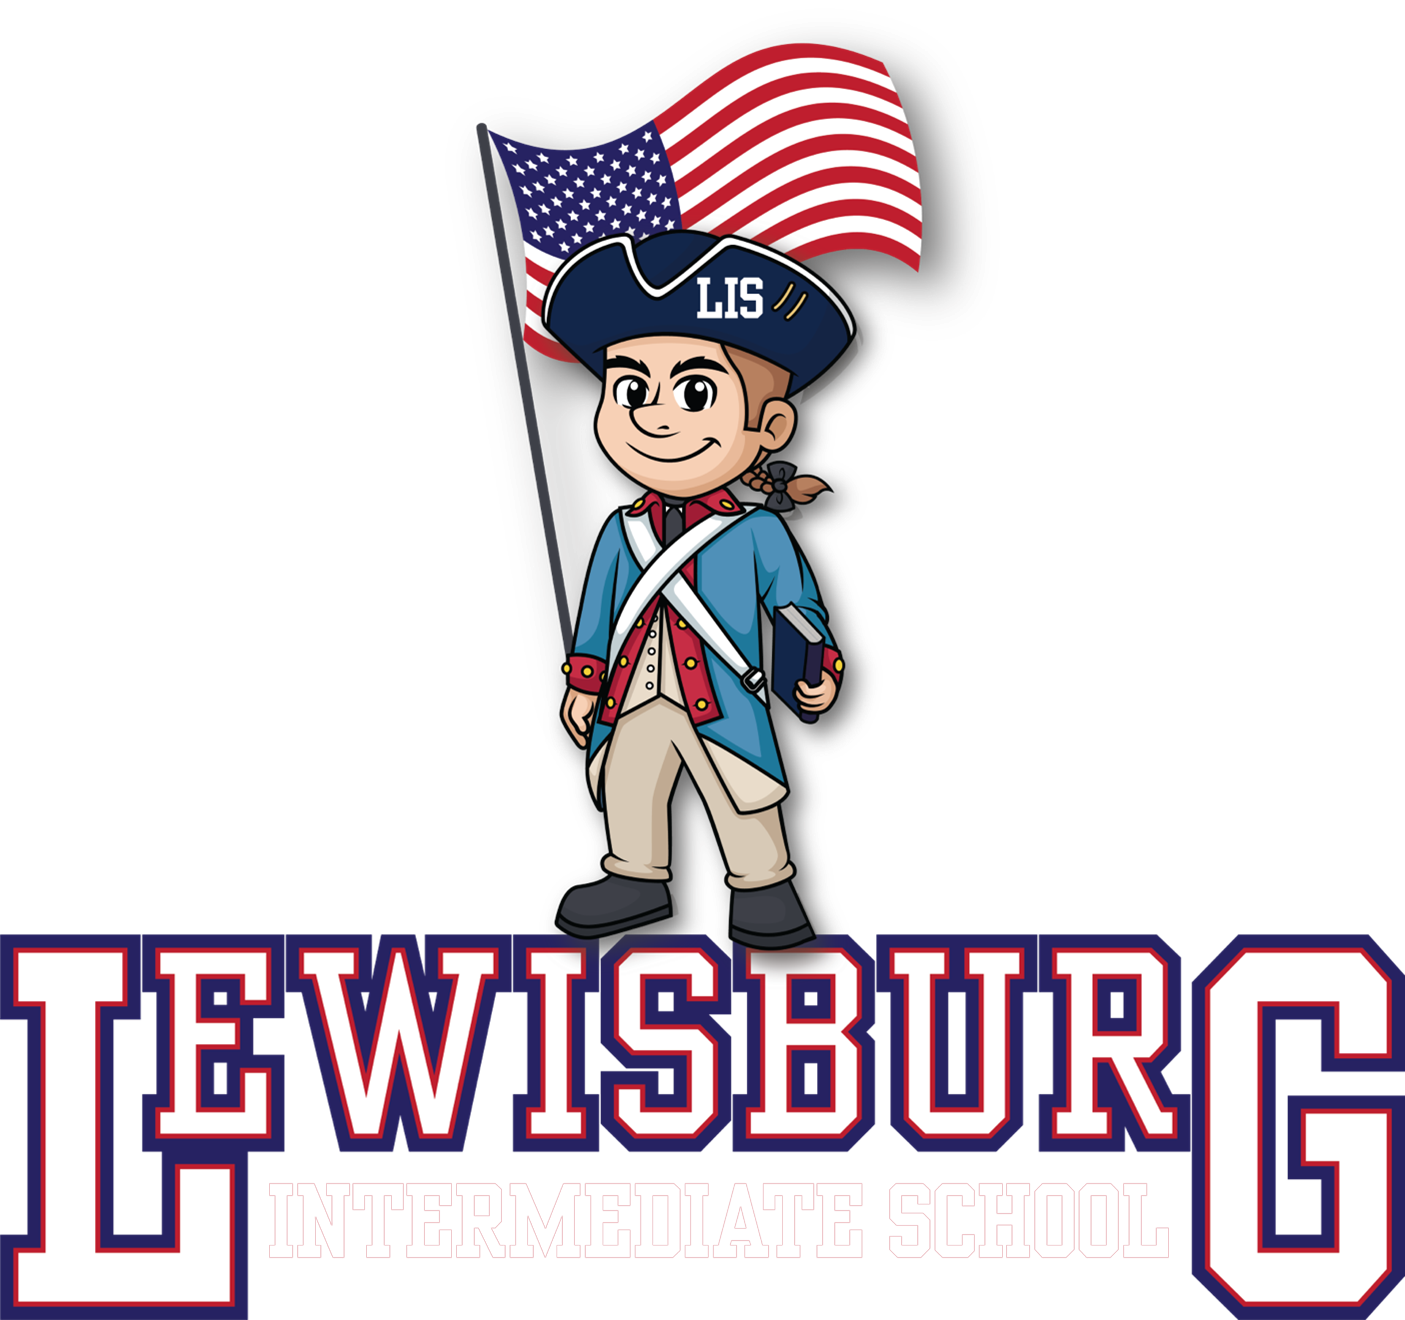 Lewisburg Intermediate School Logo